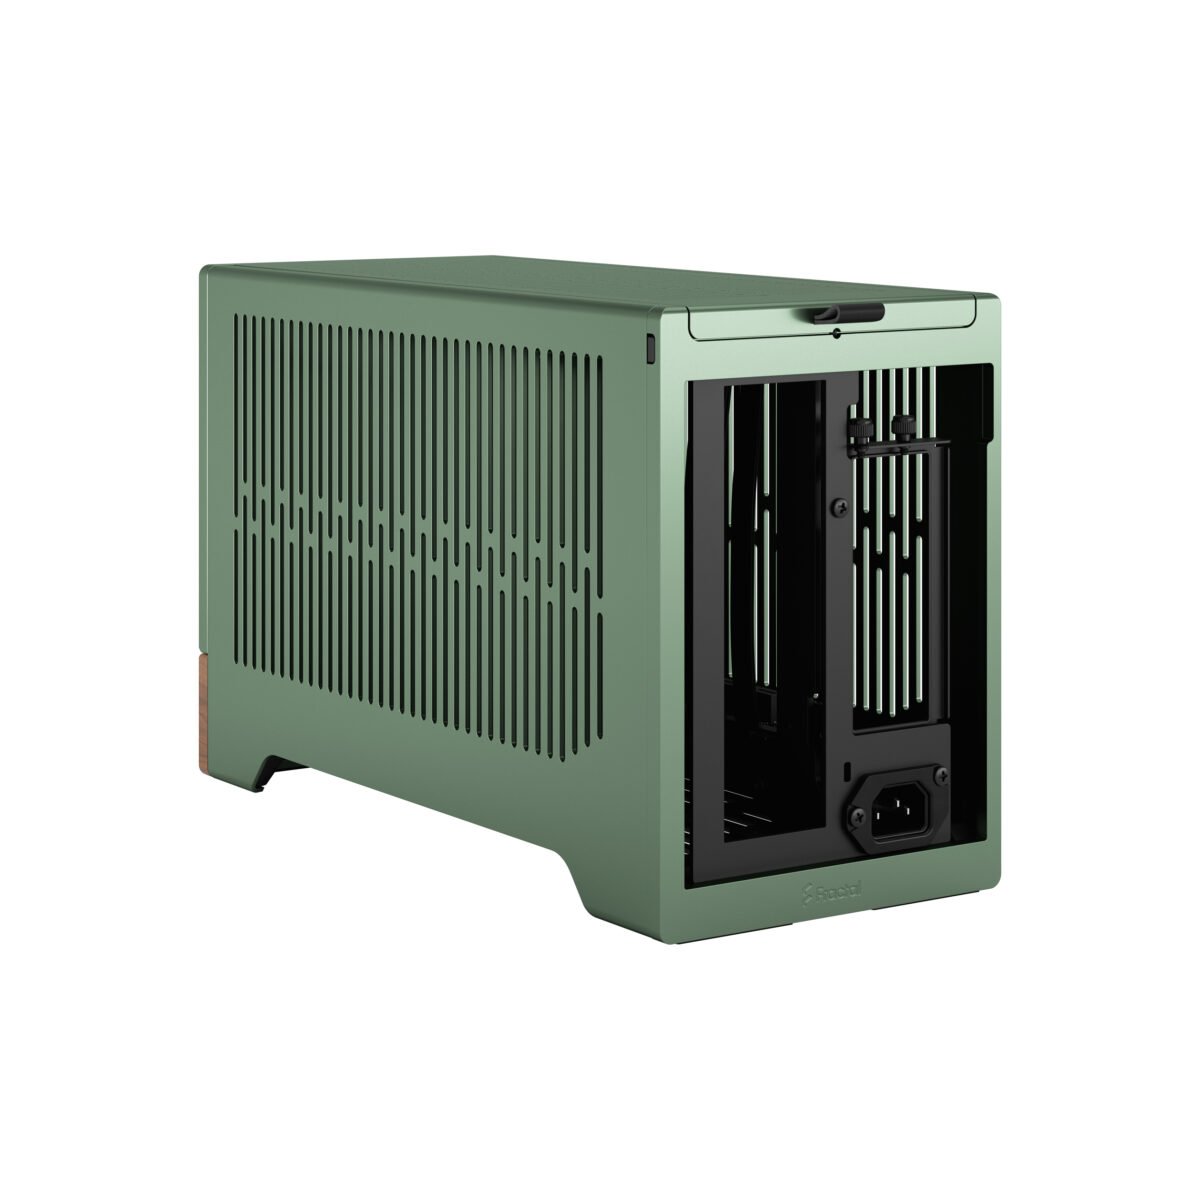 Fractal Design Terra Mini-ITX Compact PC Cases